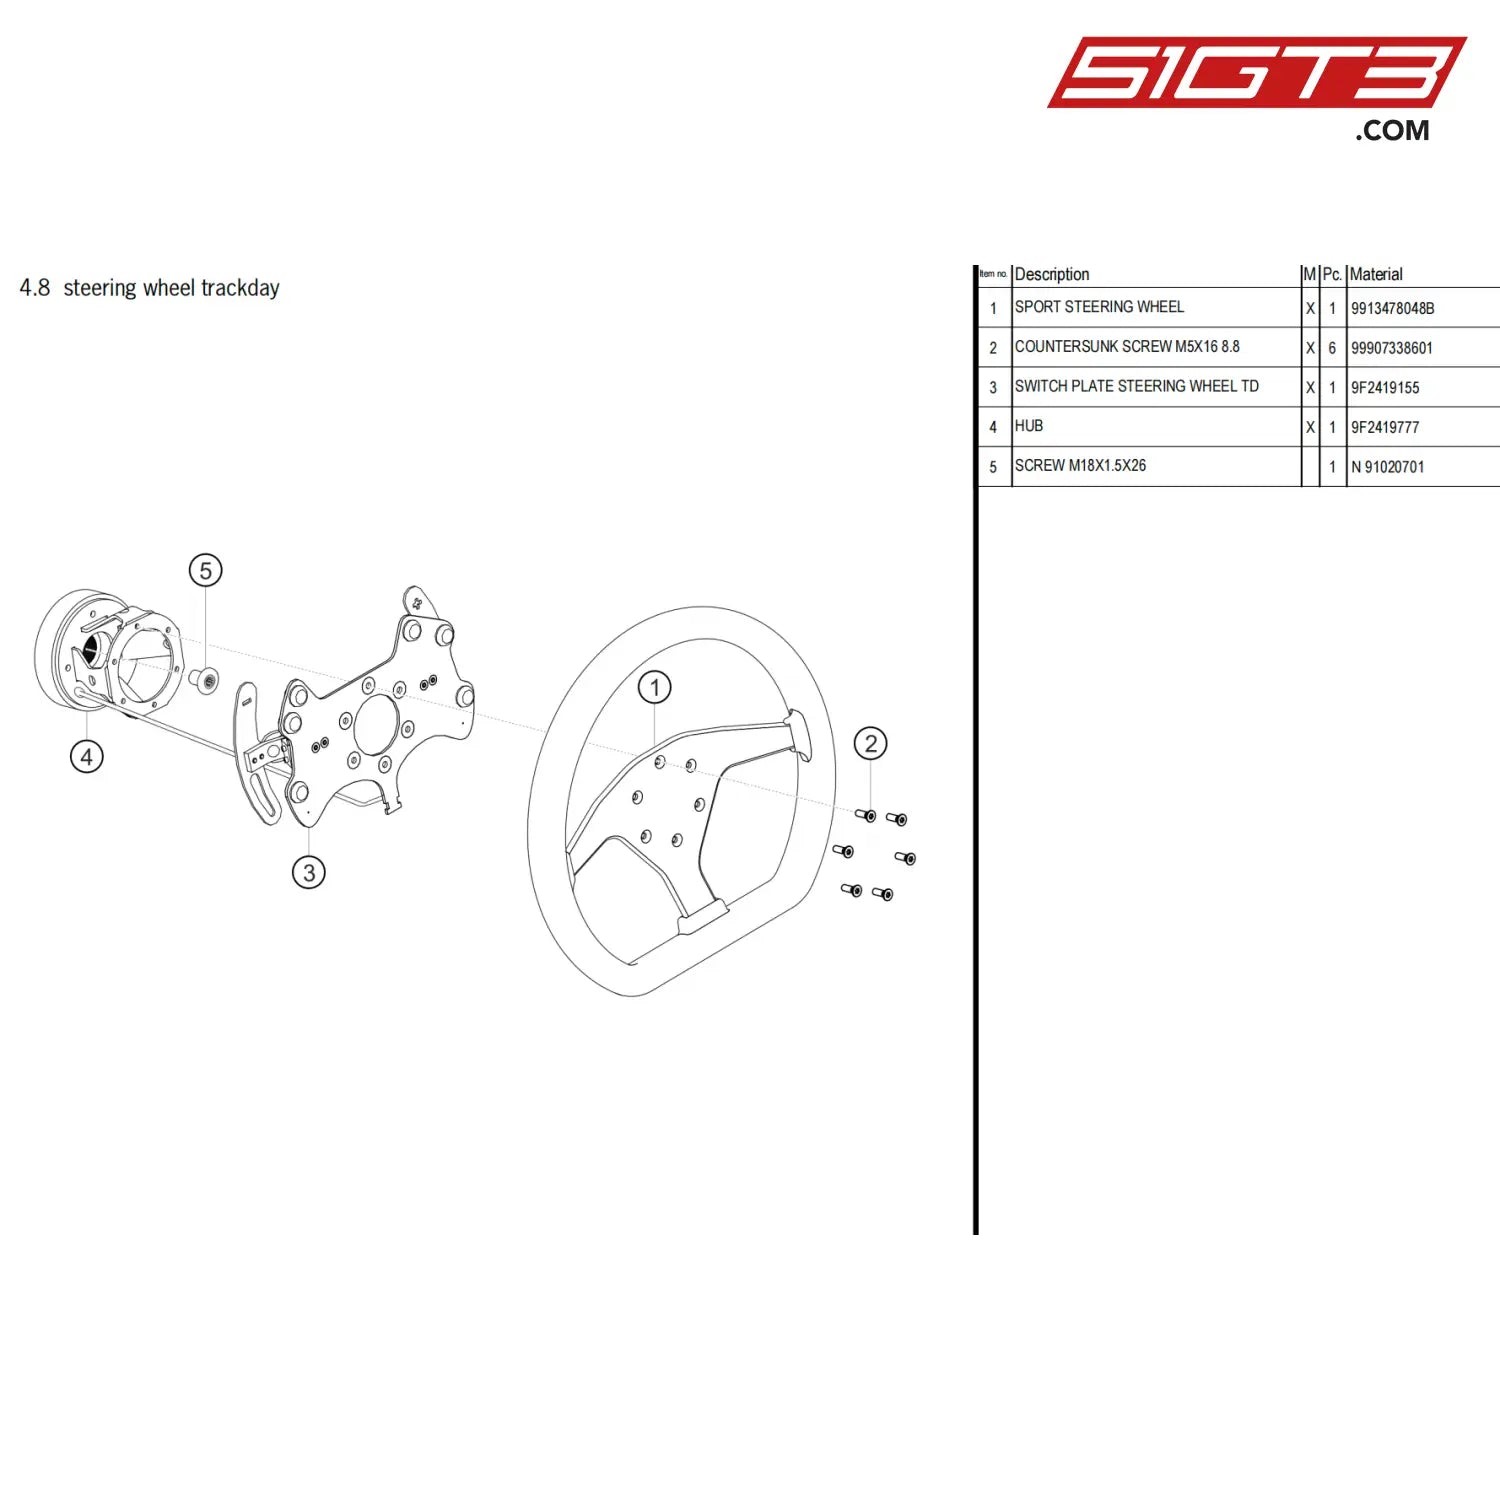 Countersunk Screw M5X16 8.8 - 99907338601 [Porsche 718 Cayman Gt4 Clubsport] Steering Wheel Trackday